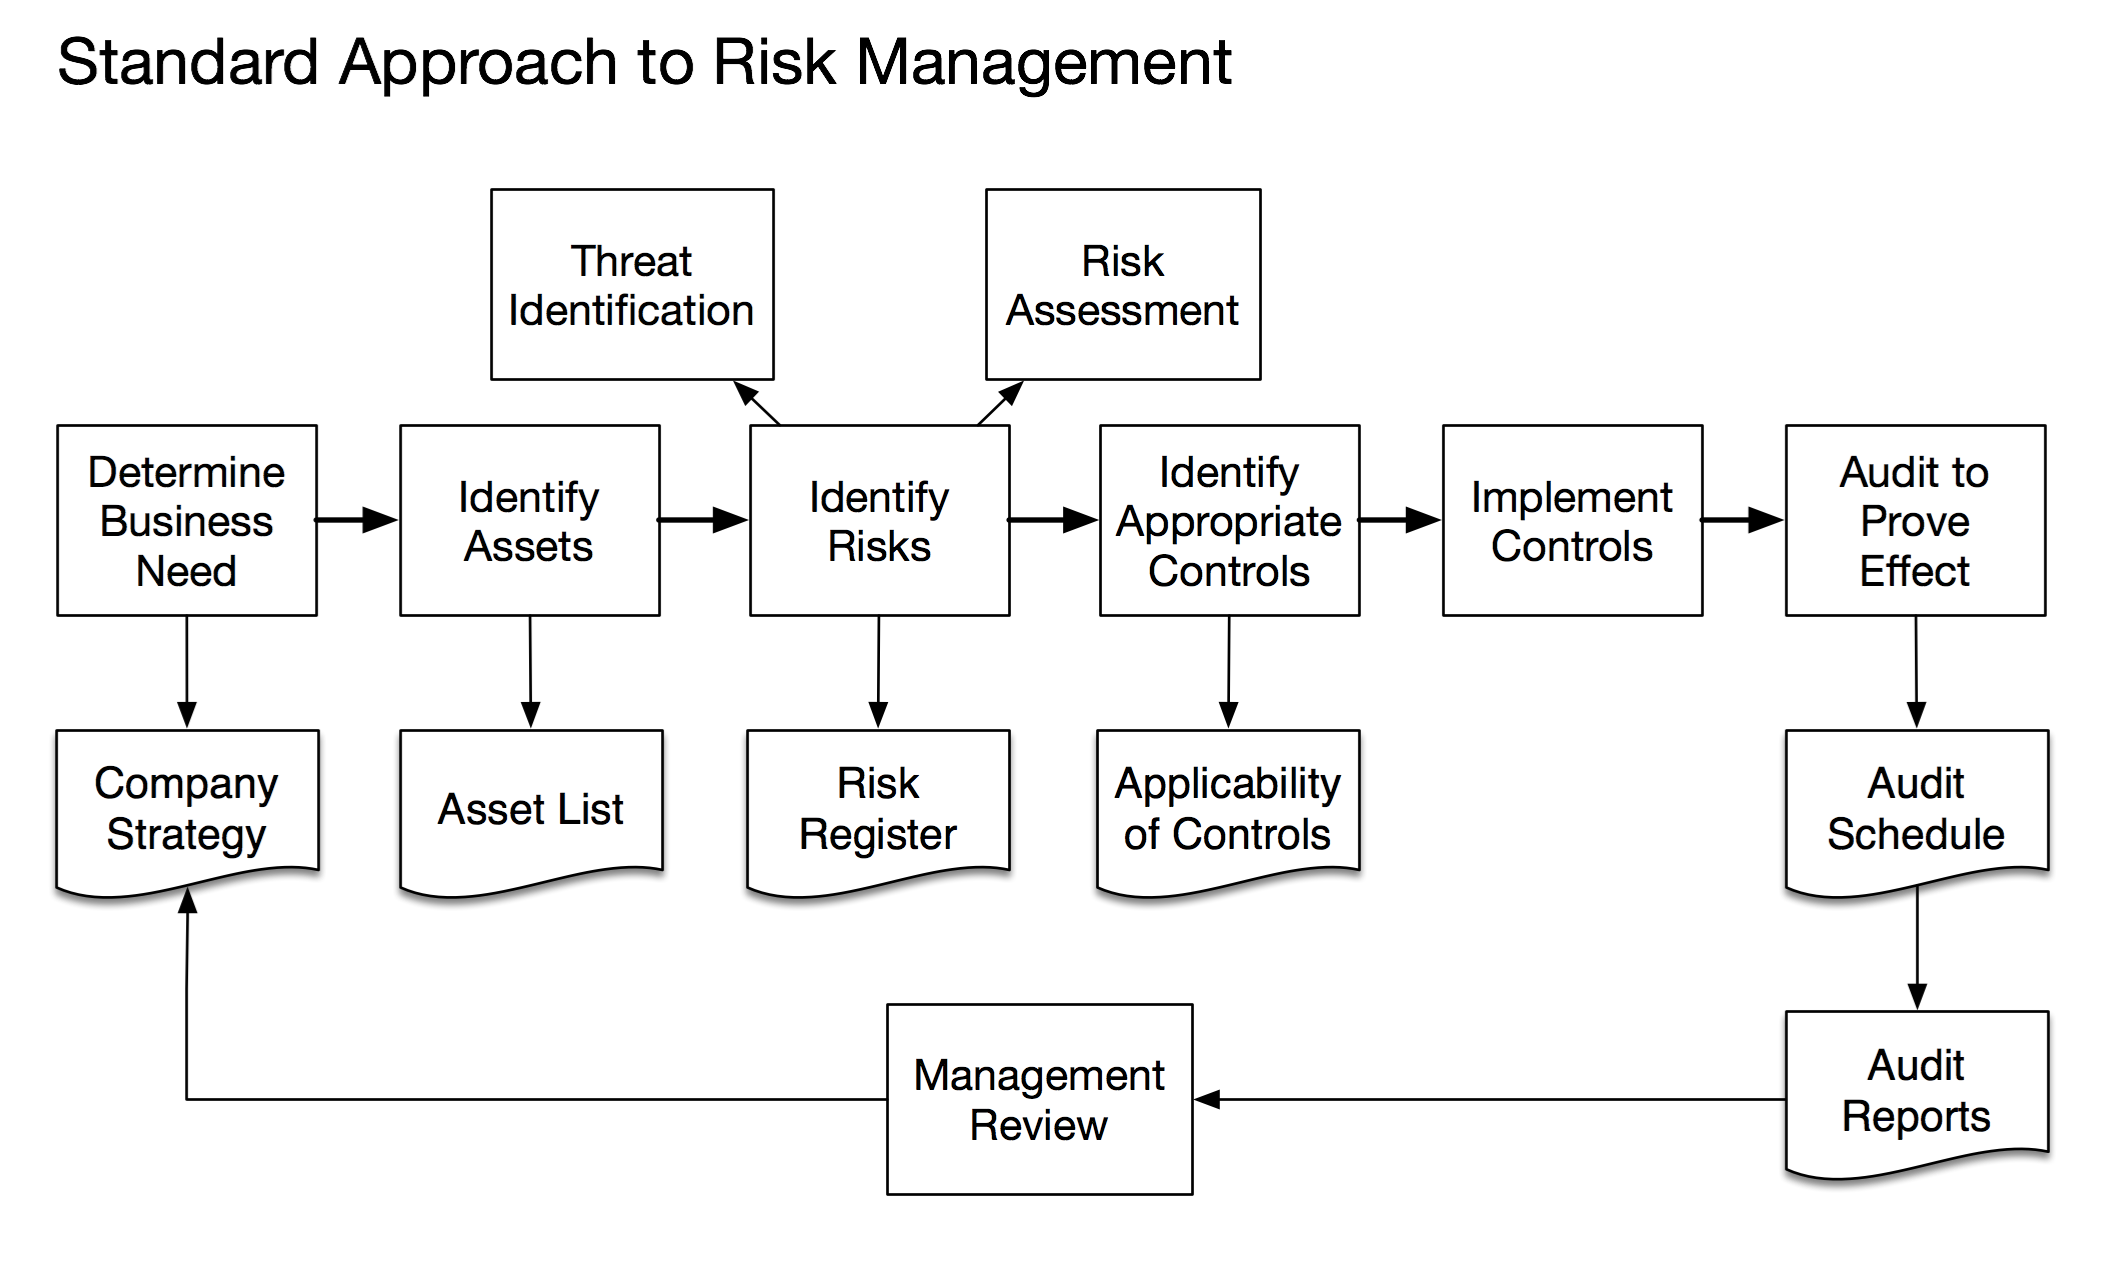 Standard Approach to Risk Management